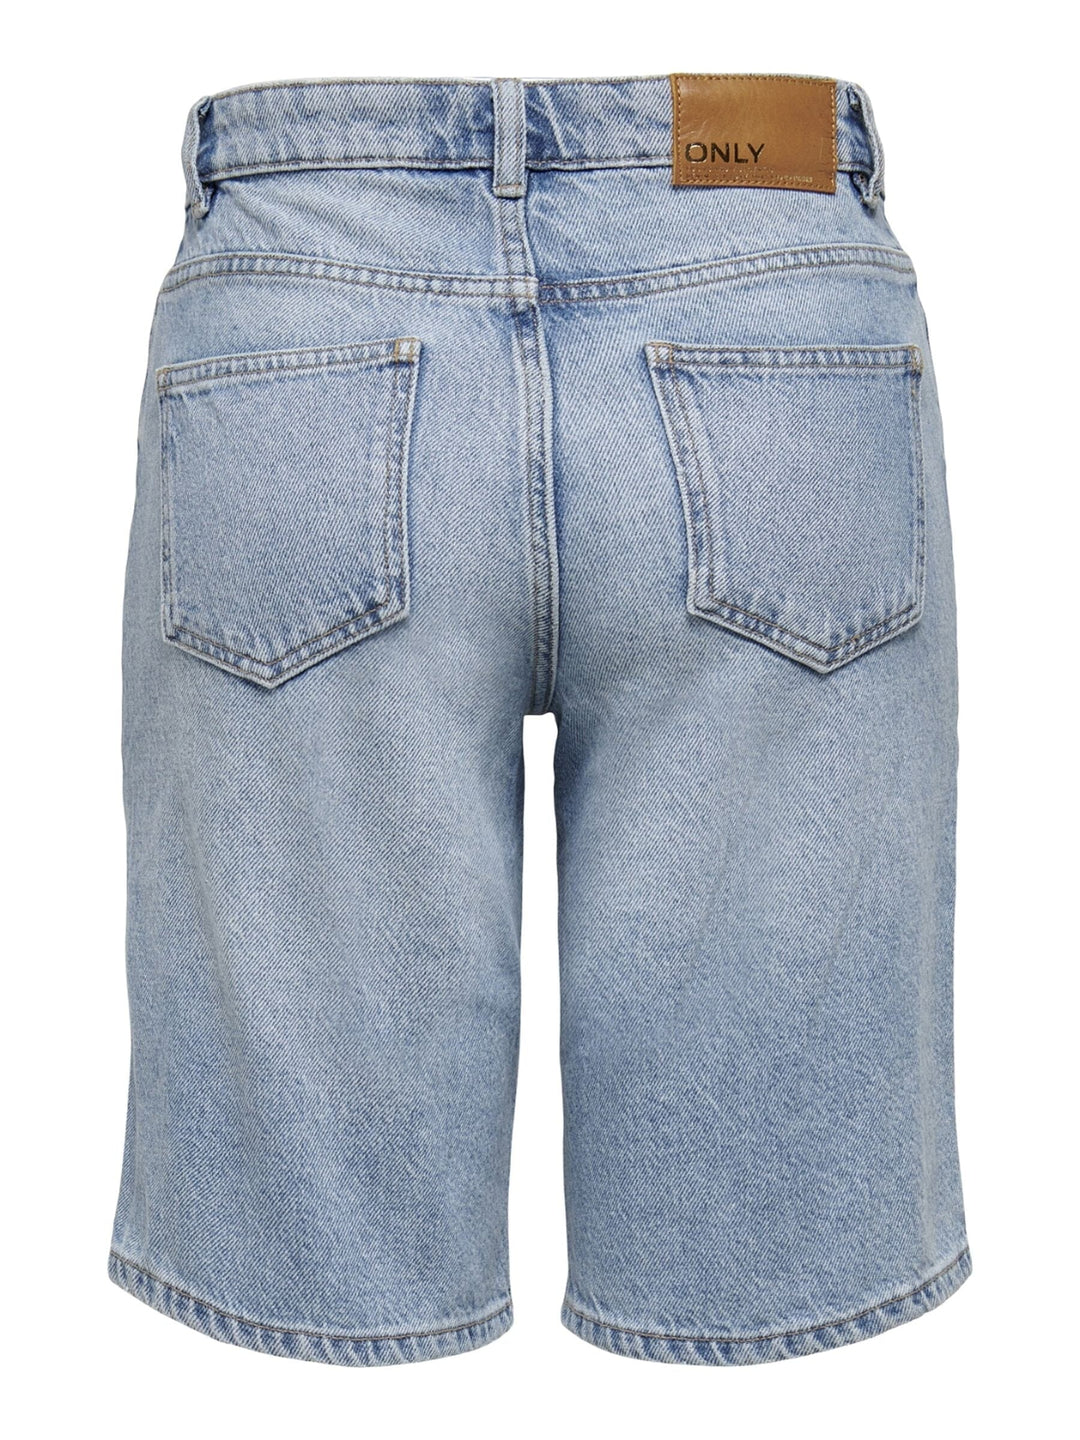 Only - Onlsonny Wide Shorts Nas843 - 3882992 Light Blue Denim Shorts 